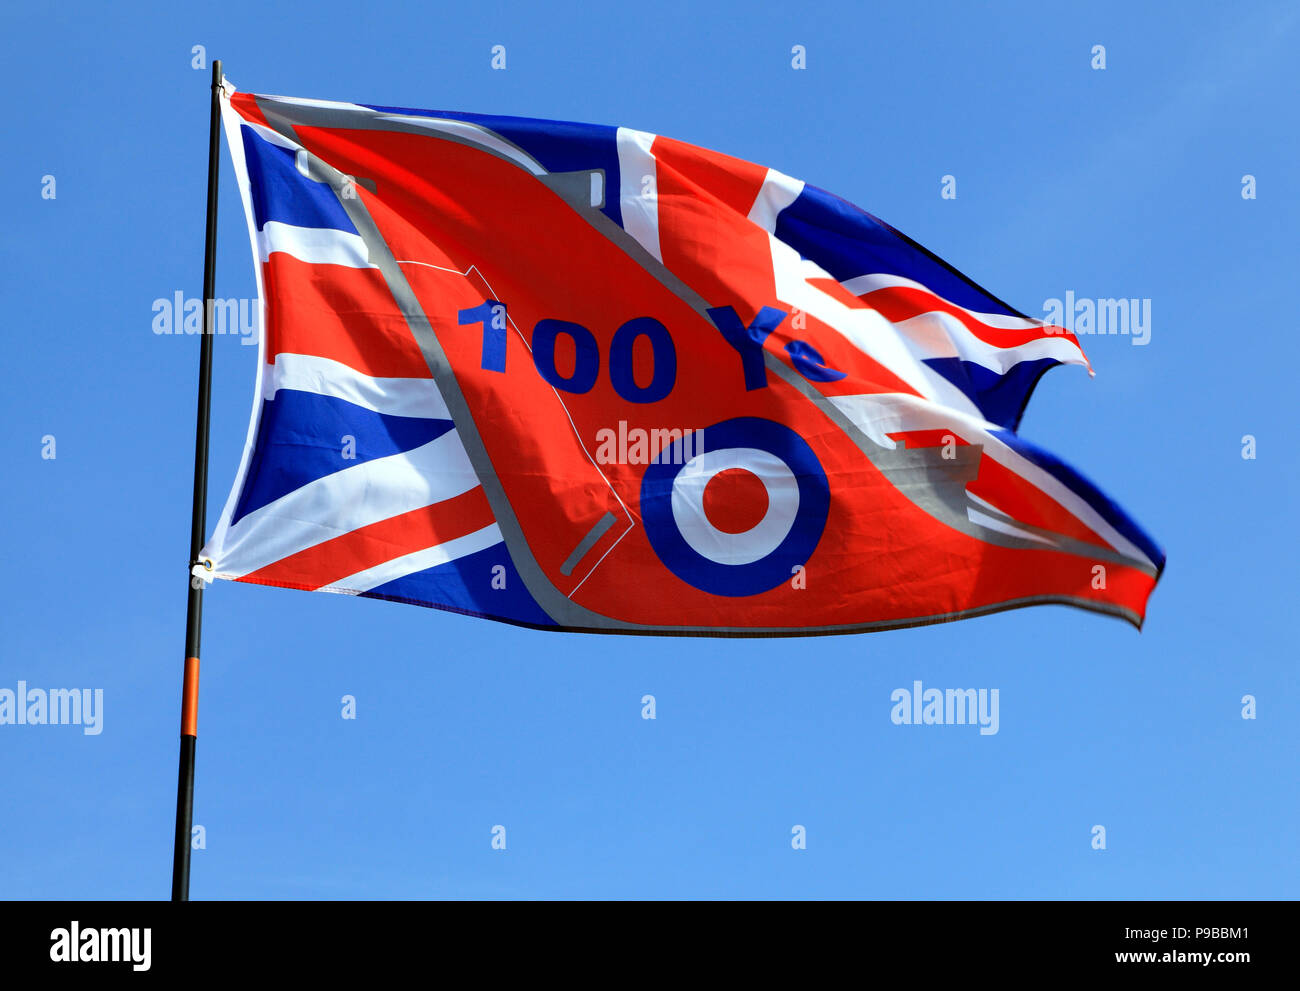 RAF, Royal Air Force, 100 anni, centenario, bandiera commemorativa, Union Jack, logo RAF Foto Stock